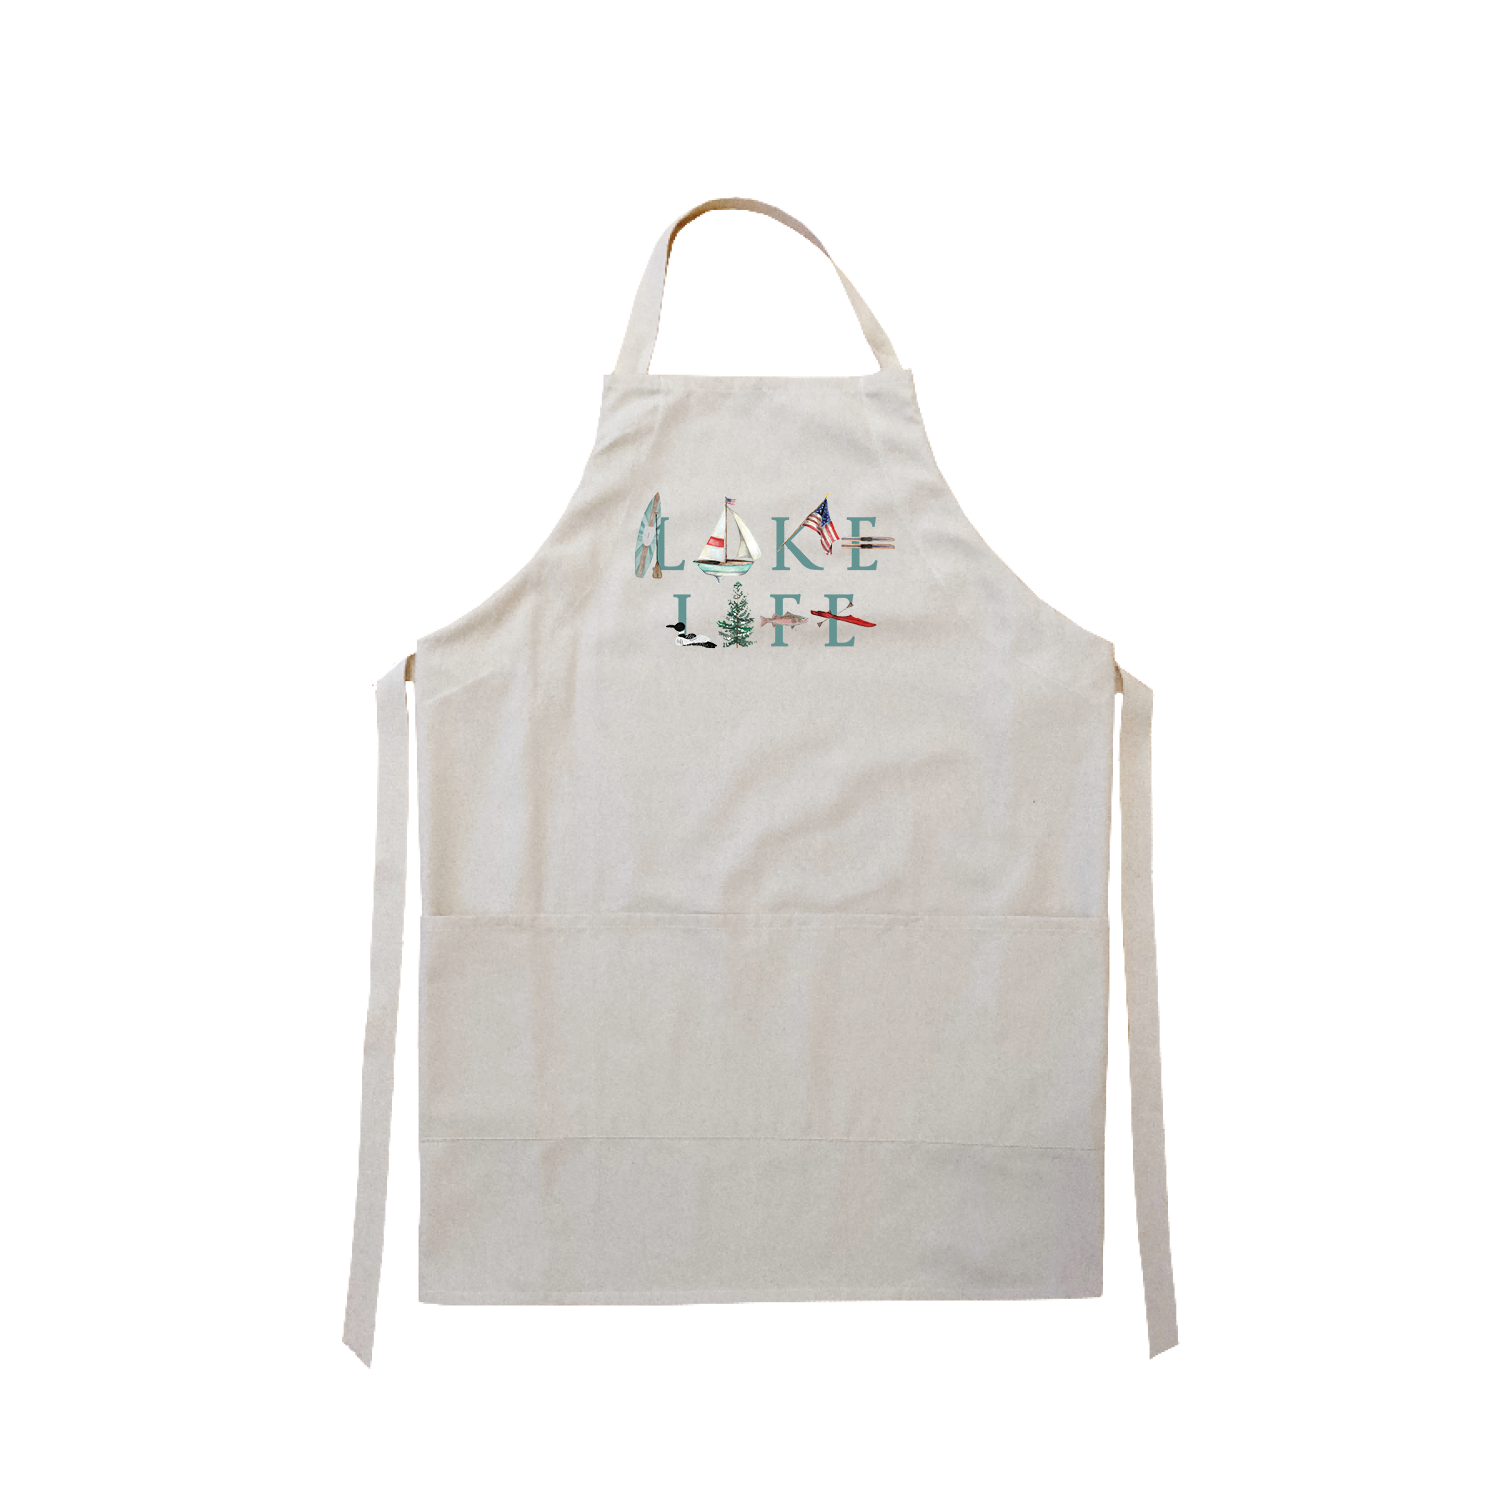 Lake Life apron